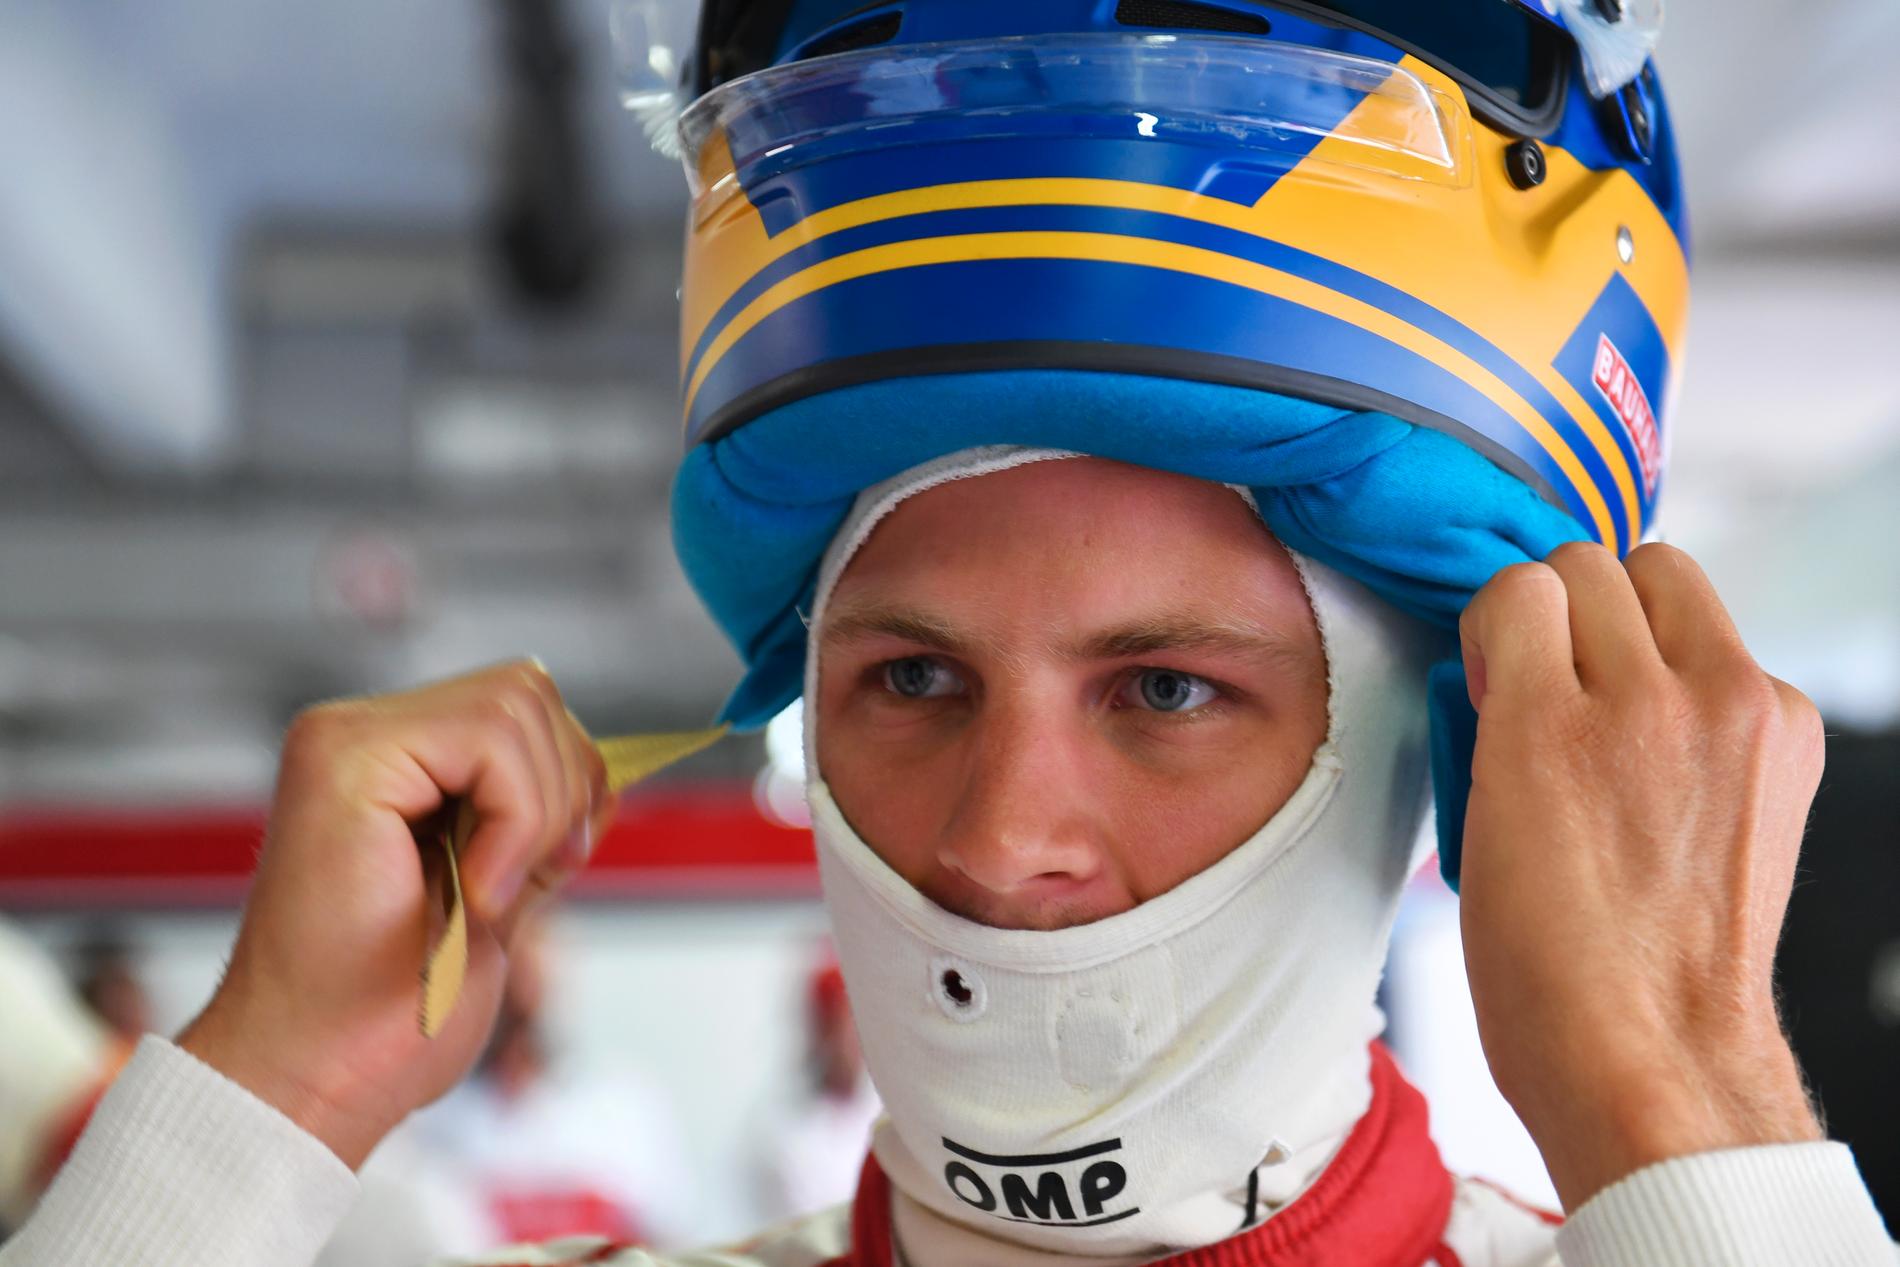 Kör Marcus Ericsson IndyCar 2019?